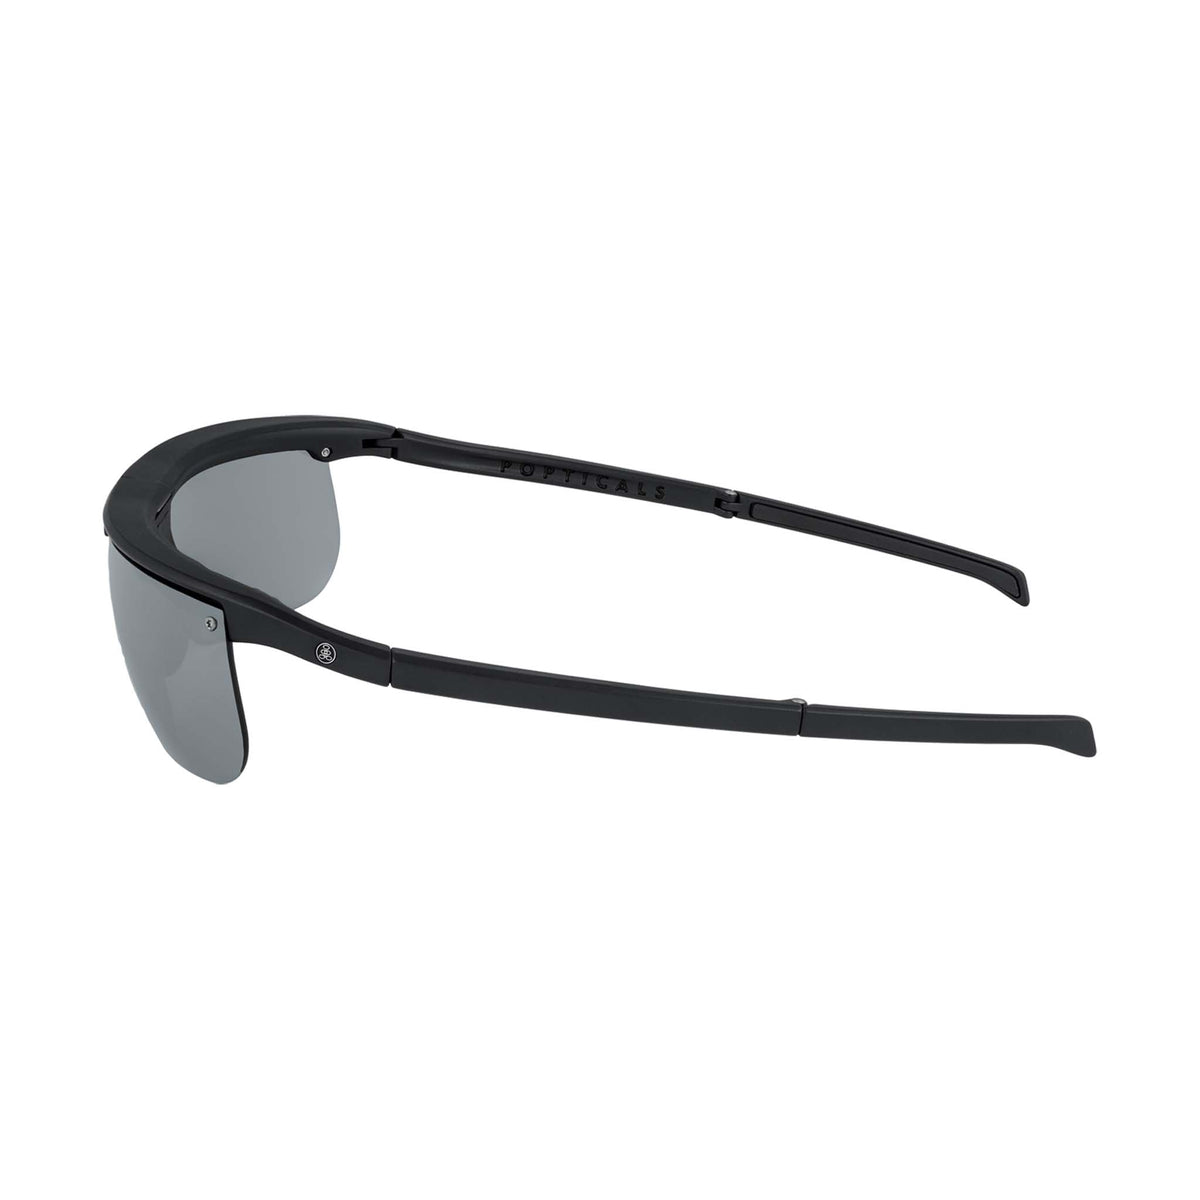 Popticals, Premium Compact Sunglasses, PopArt, 010030-BMLN, Polarized Sunglasses, Matte Black Frame, Gray Lenses with Silver Mirror Finish, Side View